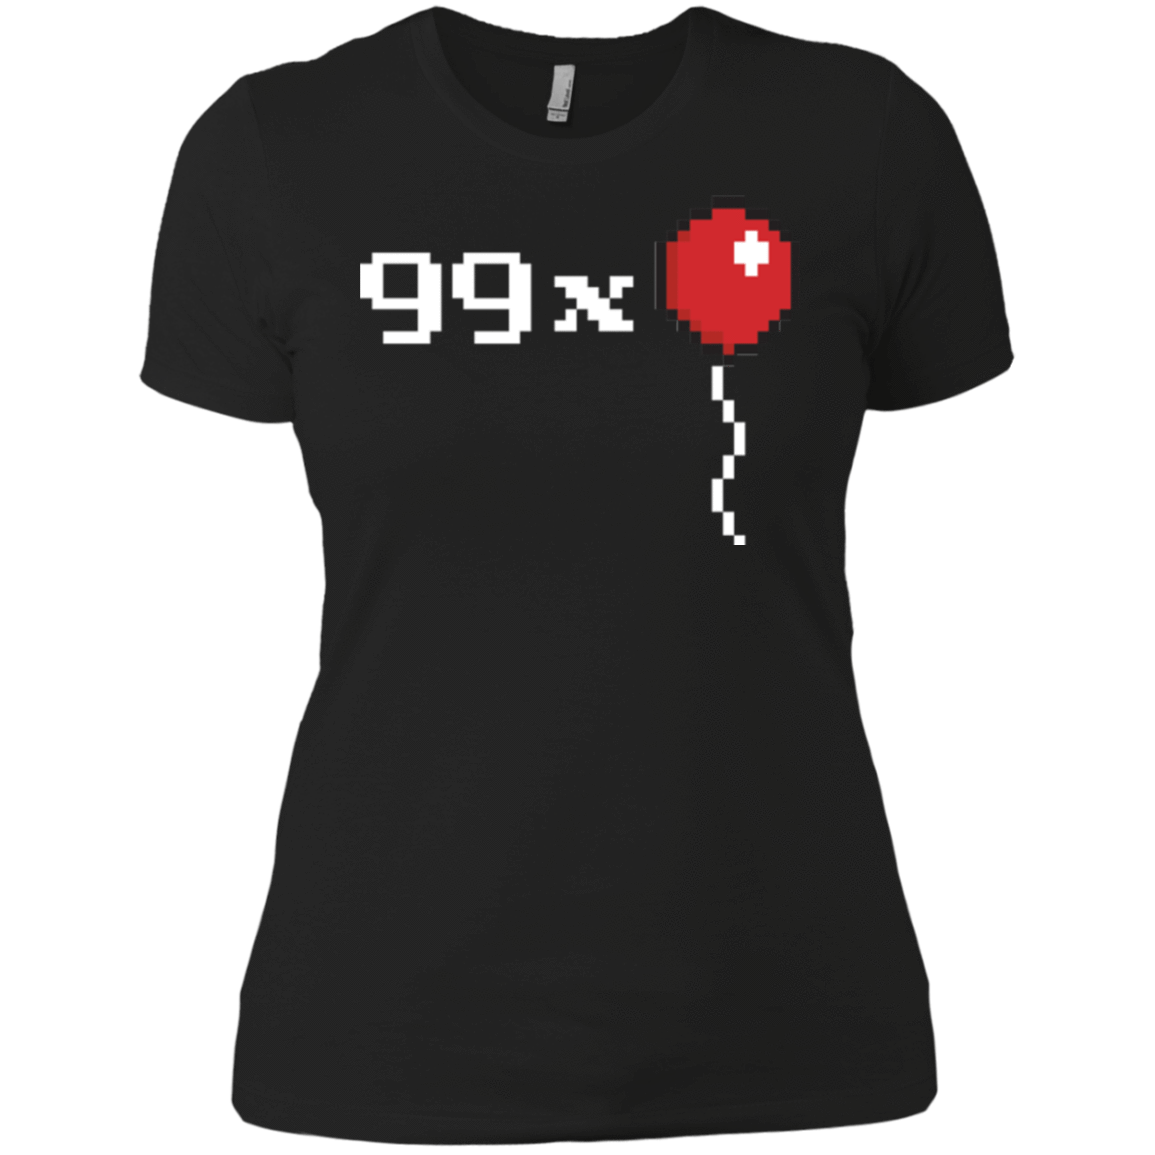 T-Shirts Black / X-Small 99x Balloon Women's Premium T-Shirt